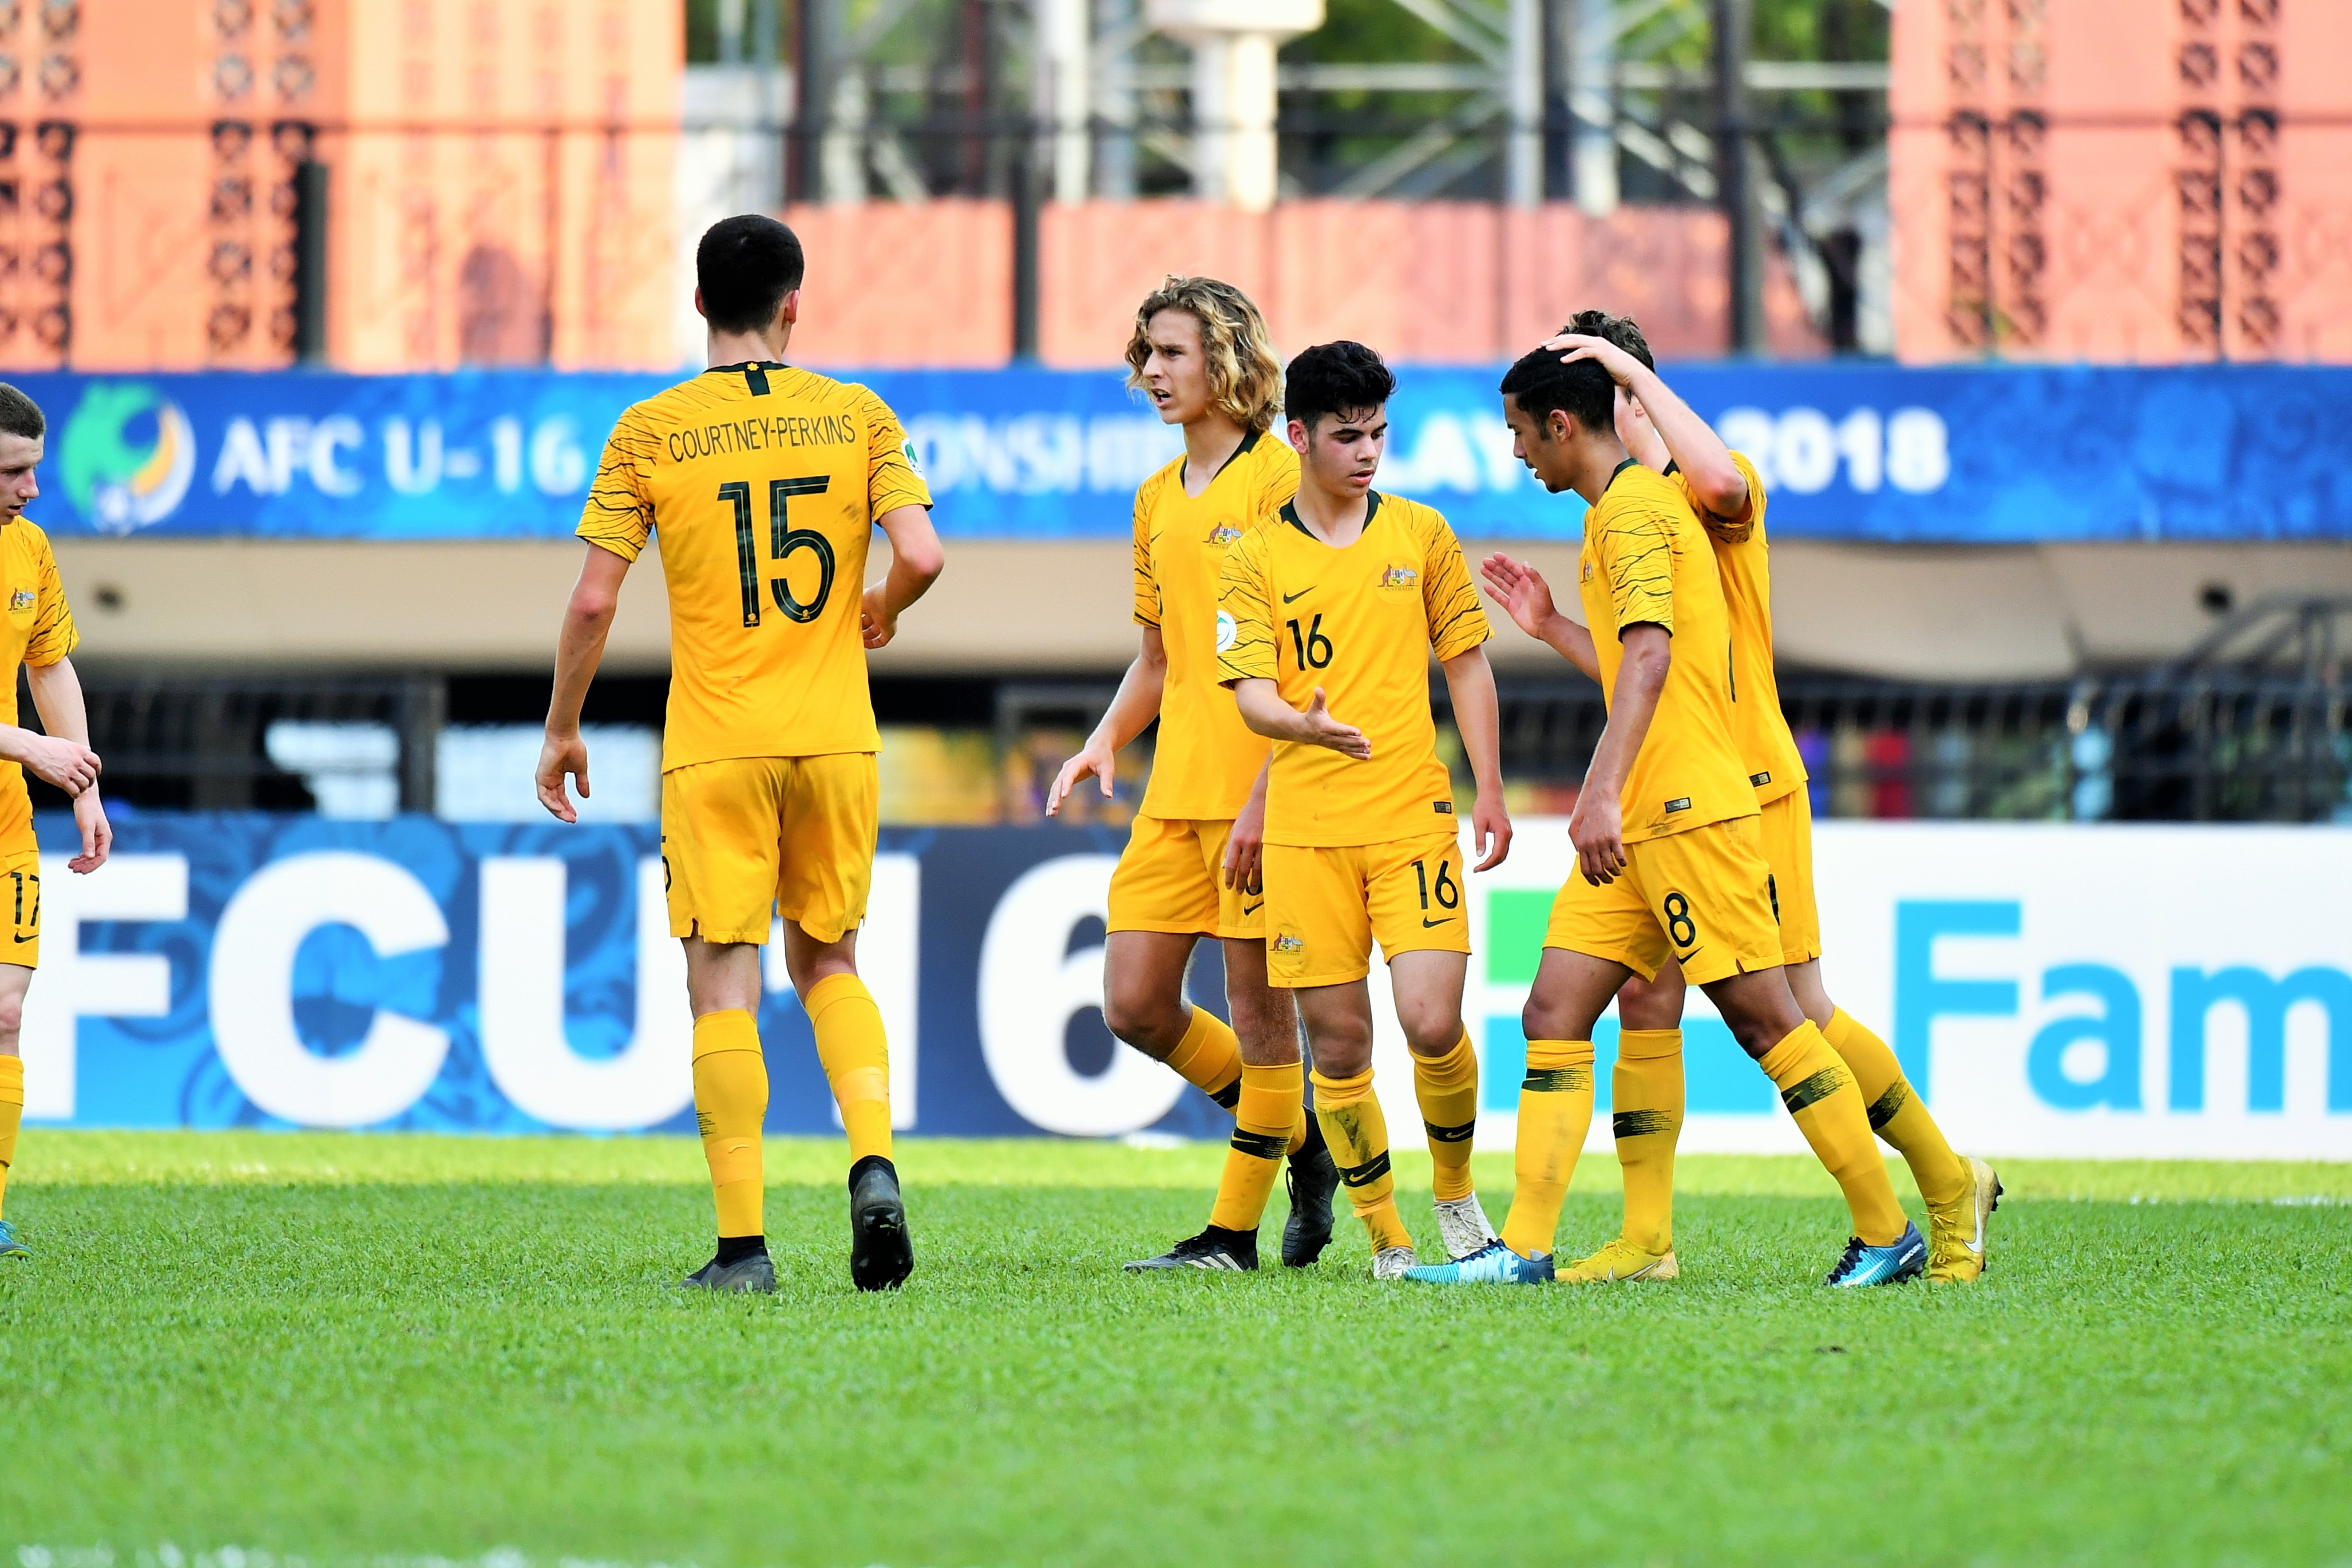 AFC U16 Championship 2020: Know your rivals - Australia